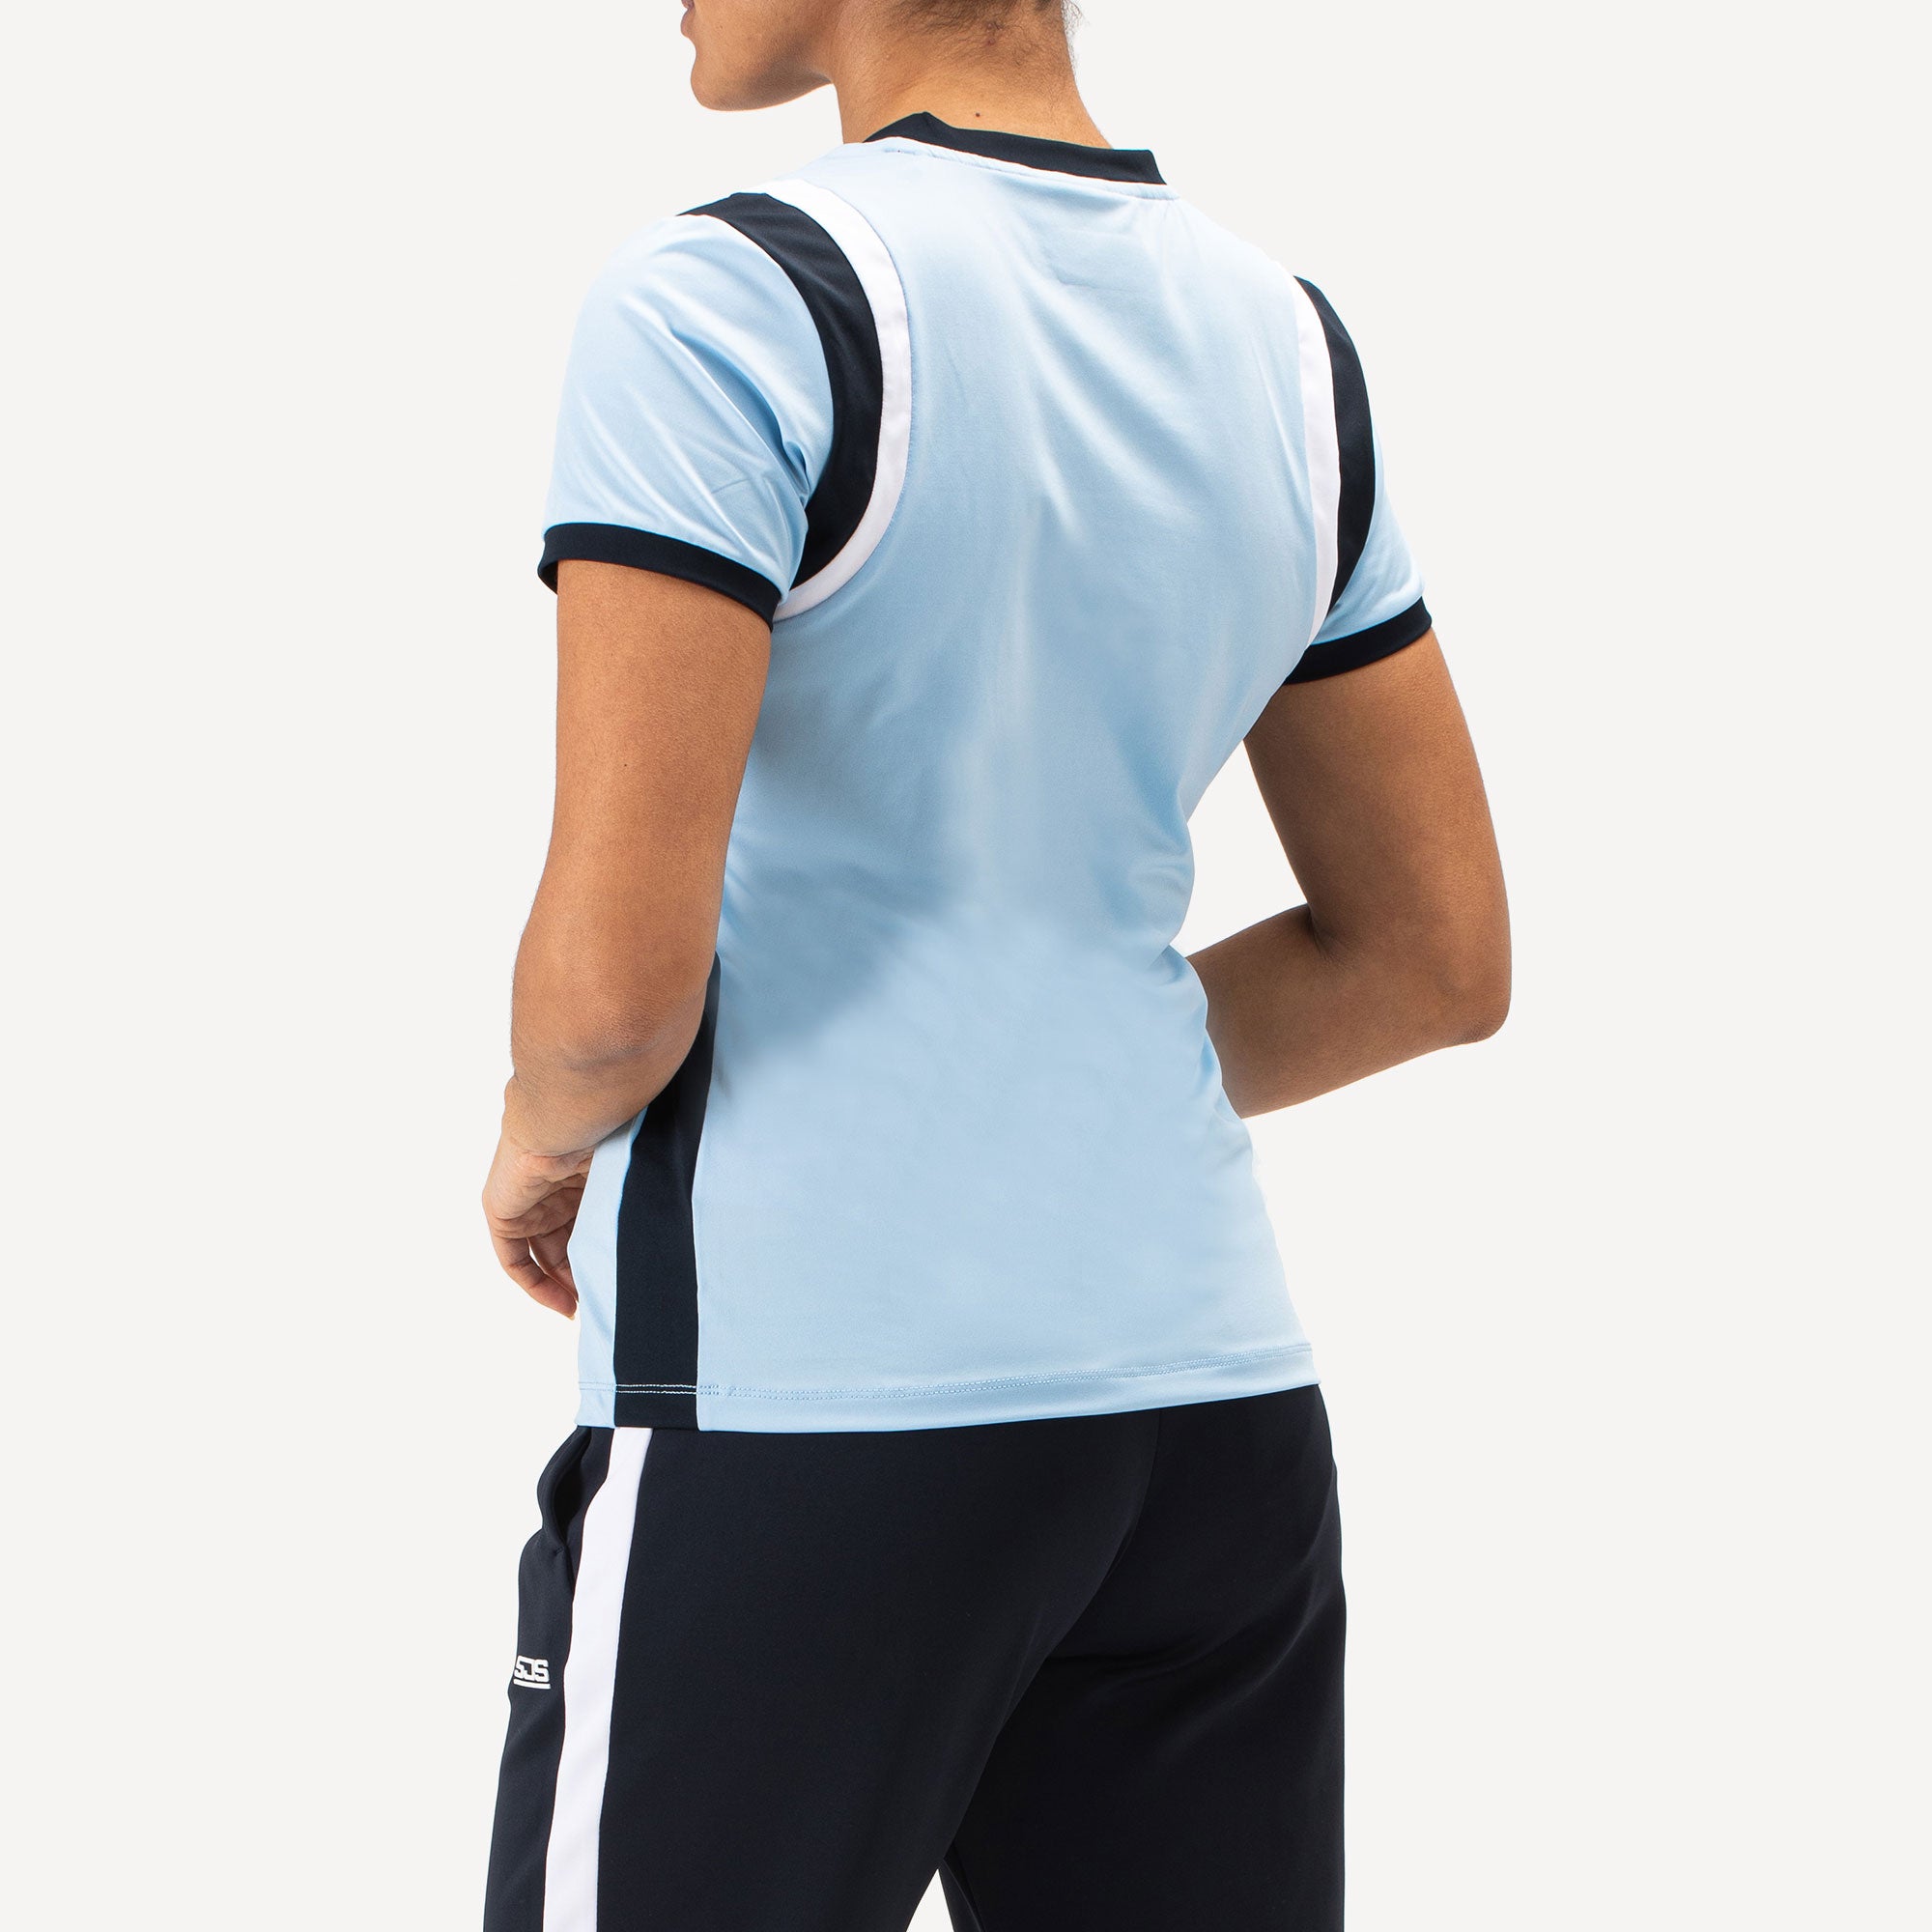 Sjeng Sports Inana Women's Tennis Shirt - Blue (2)